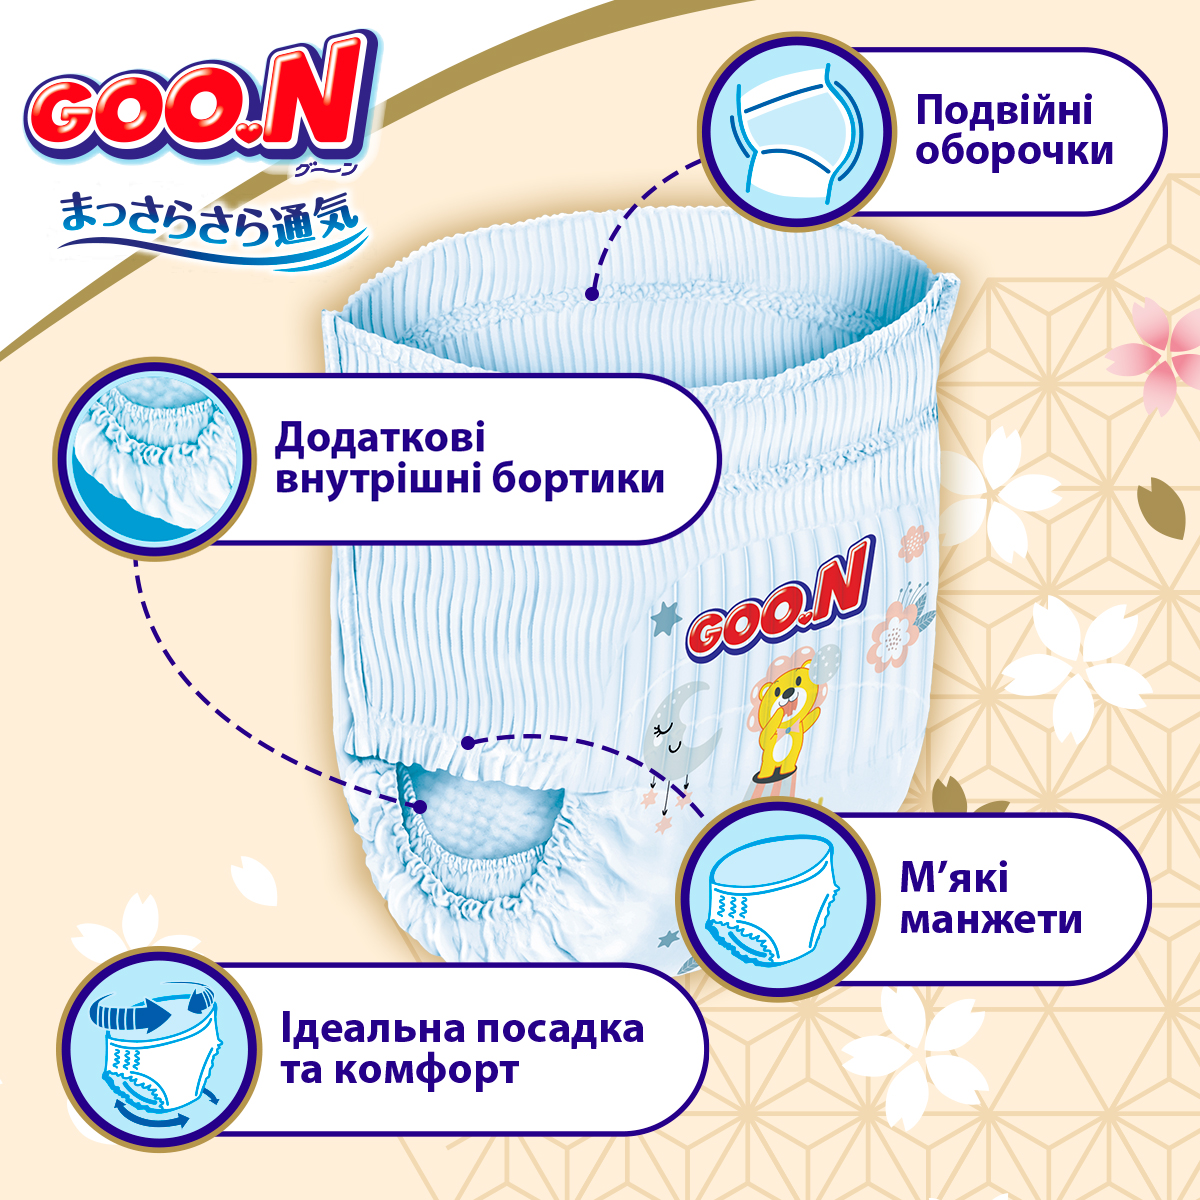 Трусики-подгузники Goo.N Premium Soft размер 4(L) 9-14 кг доу-пак 88 шт. - фото 4